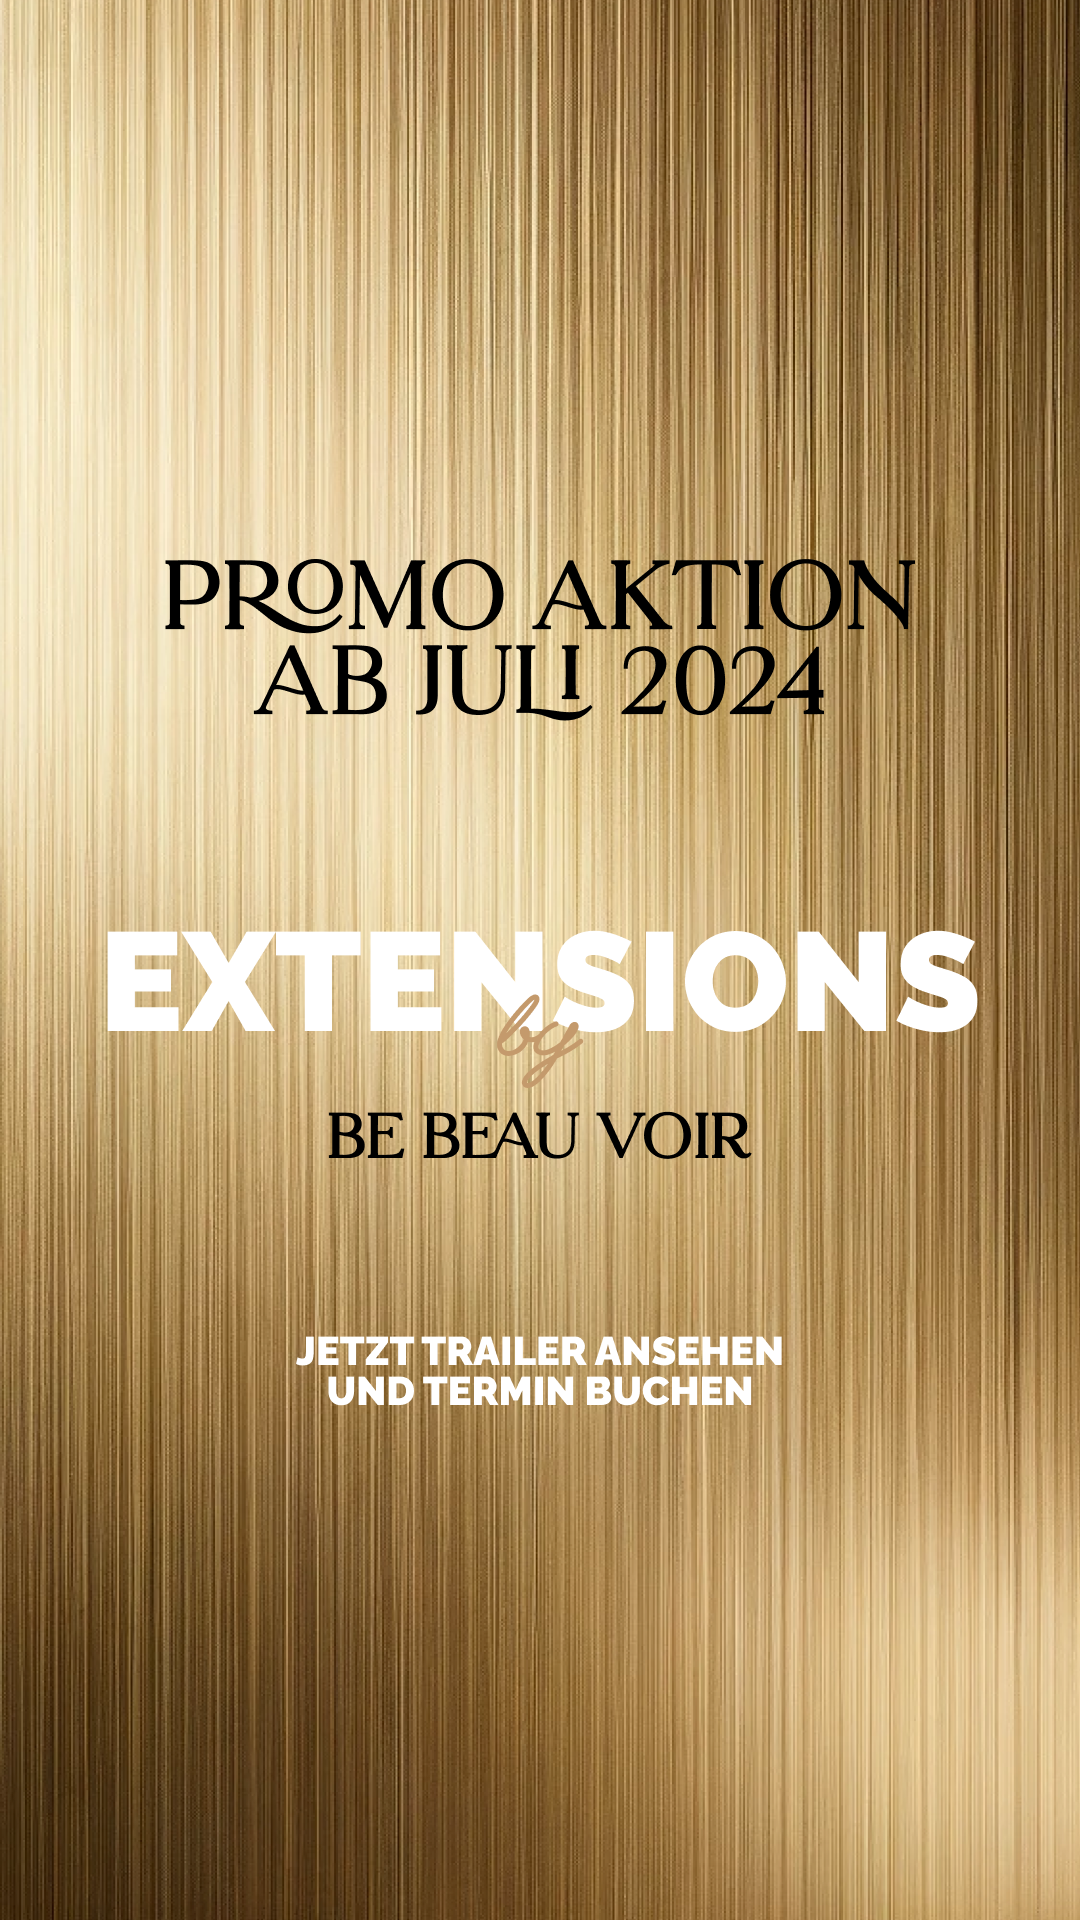 EXTENSIONS - PROMO AKTION AB JULI 2024